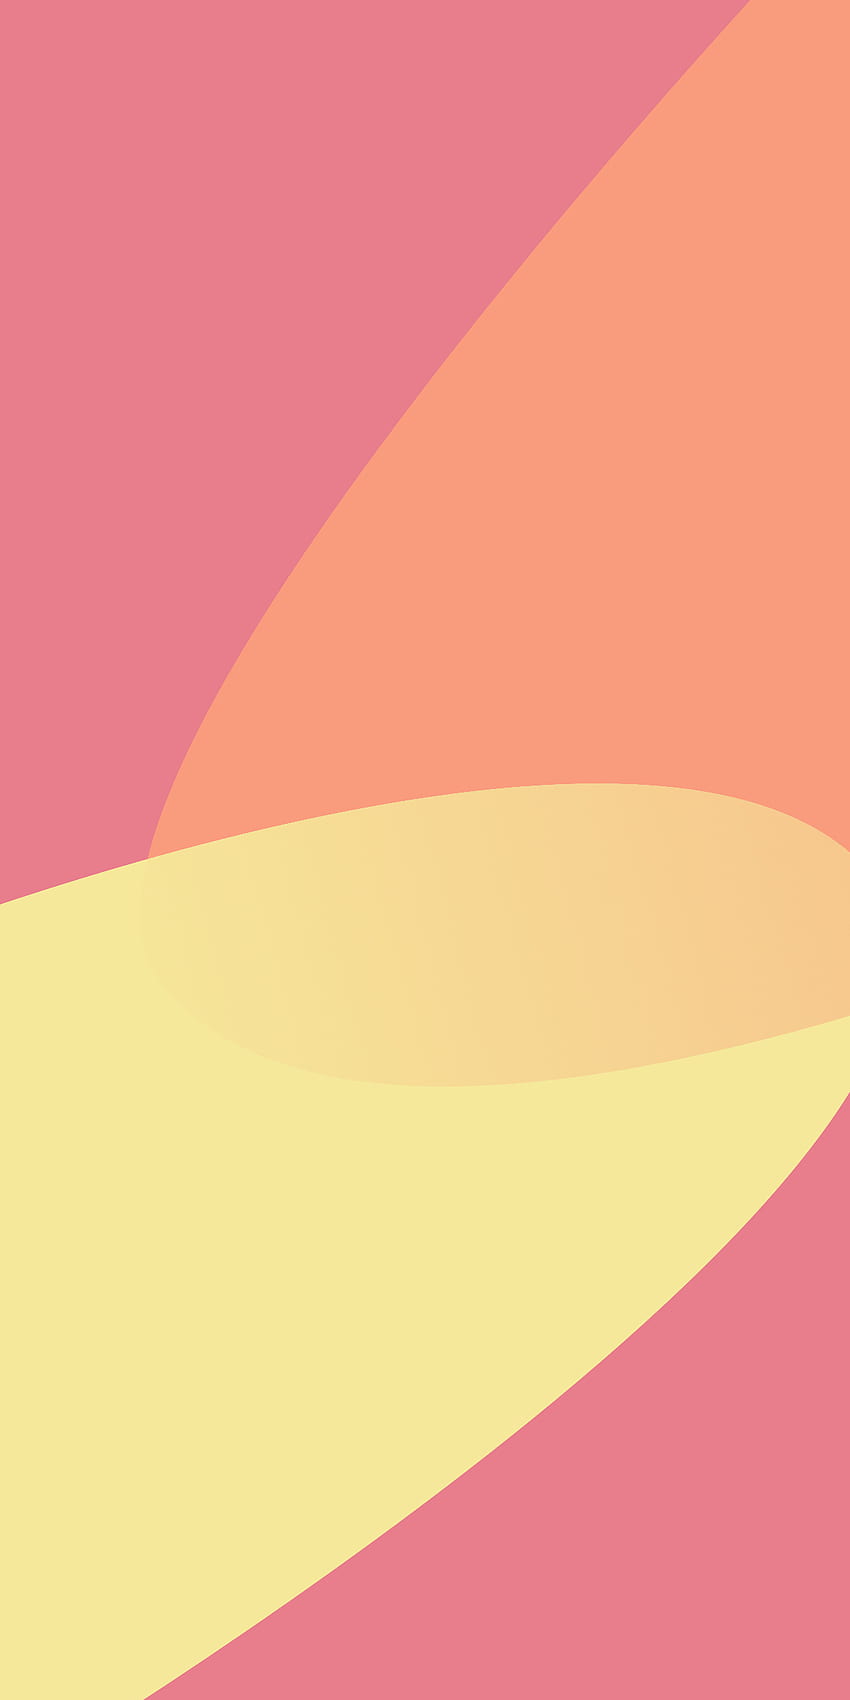 Abstracto, naranja, rosa, moderno, relajado, relajante, claro, patrón, amarillo, minimalista, elegante fondo de pantalla del teléfono